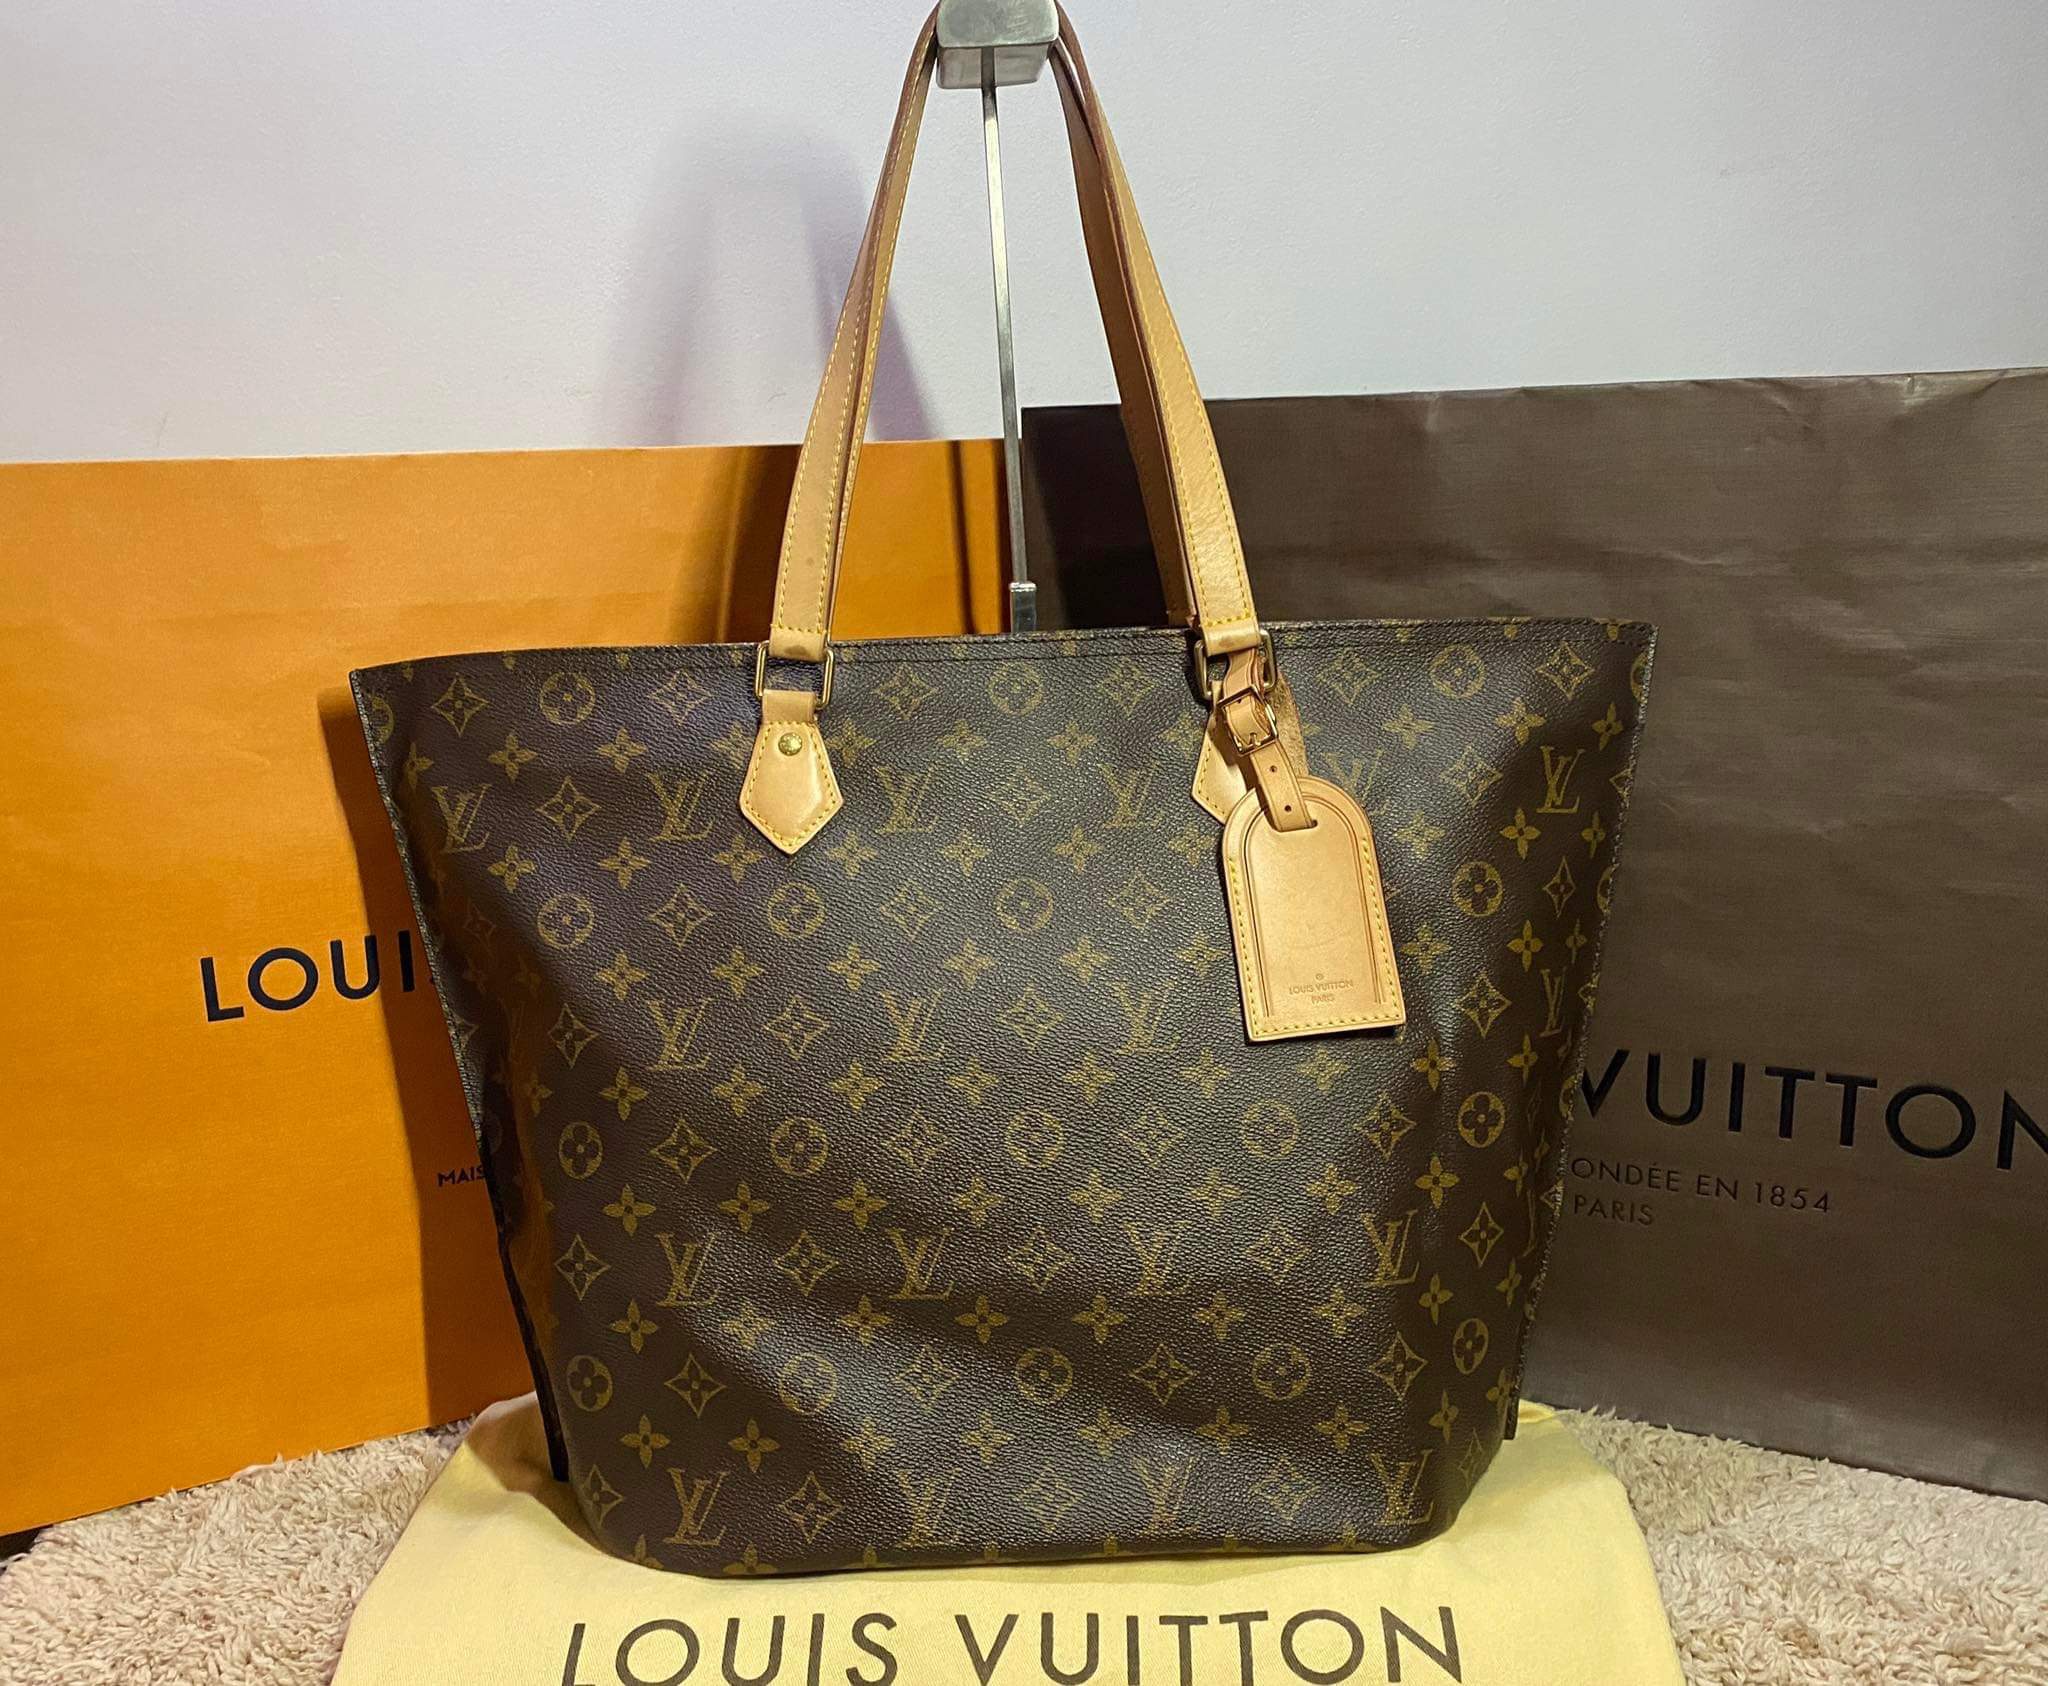 LOUIS VUITTON All in PM Tote Bag Handbag Shoulderbag M47028